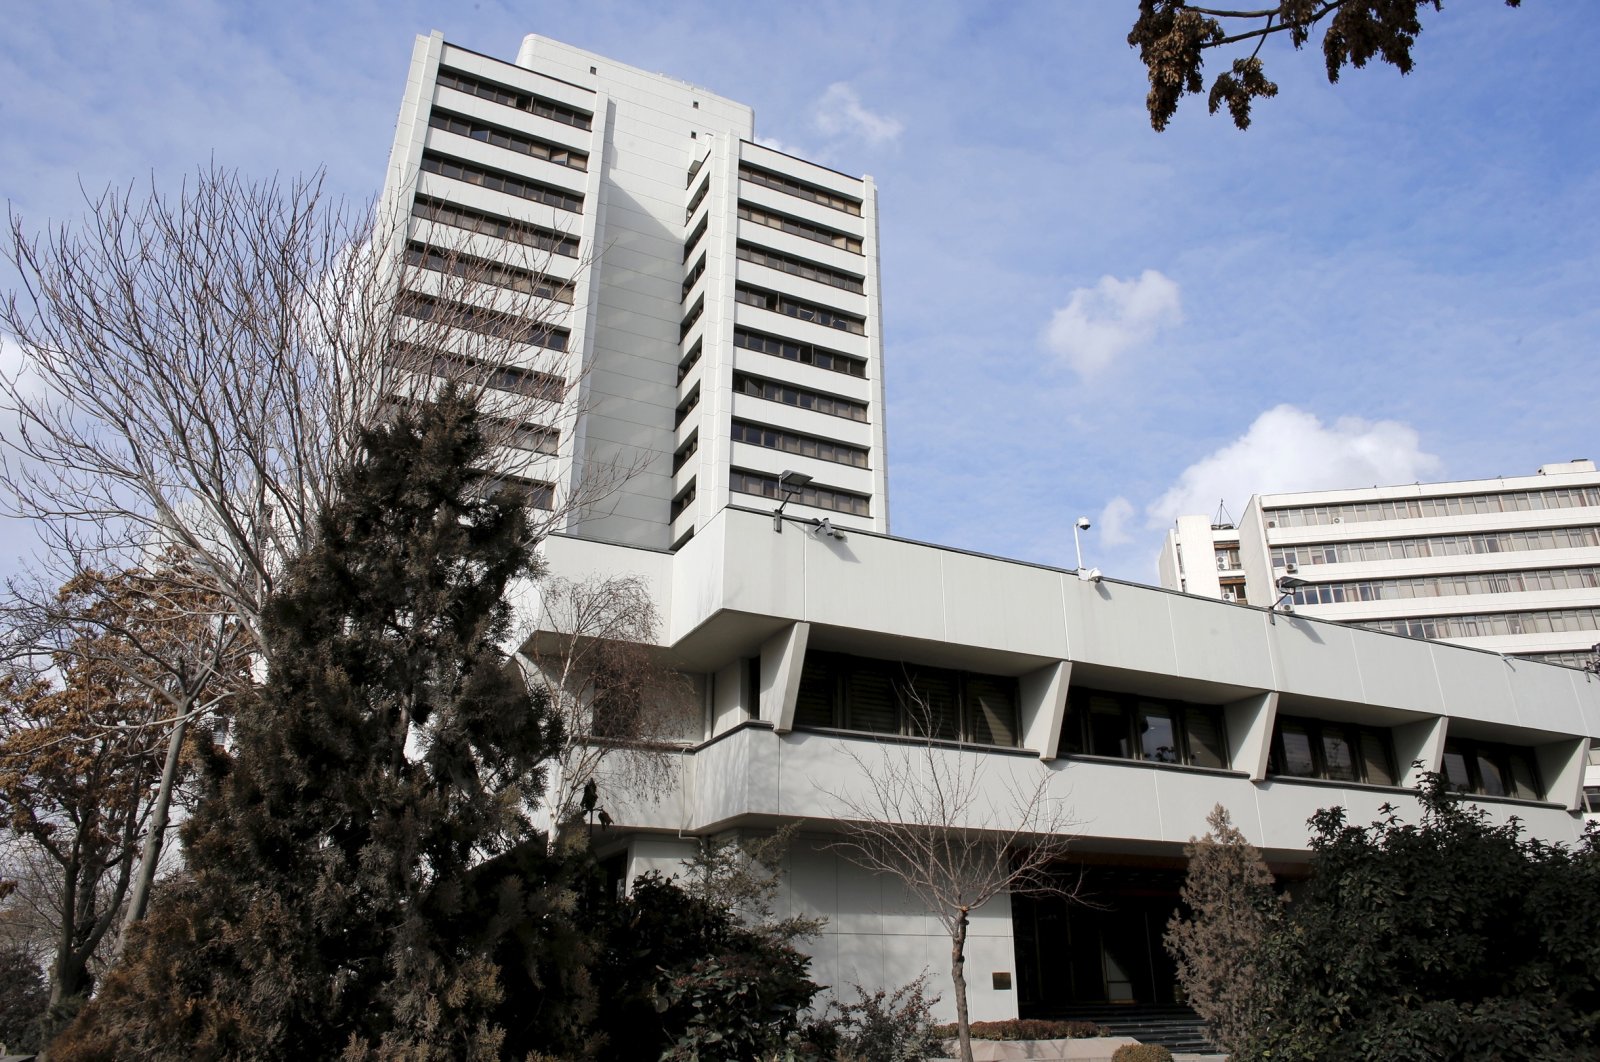 The Central Bank of the Republic of Turkey (CBRT) headquarters is seen in Ankara, Turkey, Jan. 24, 2014. (Reuters Photo)